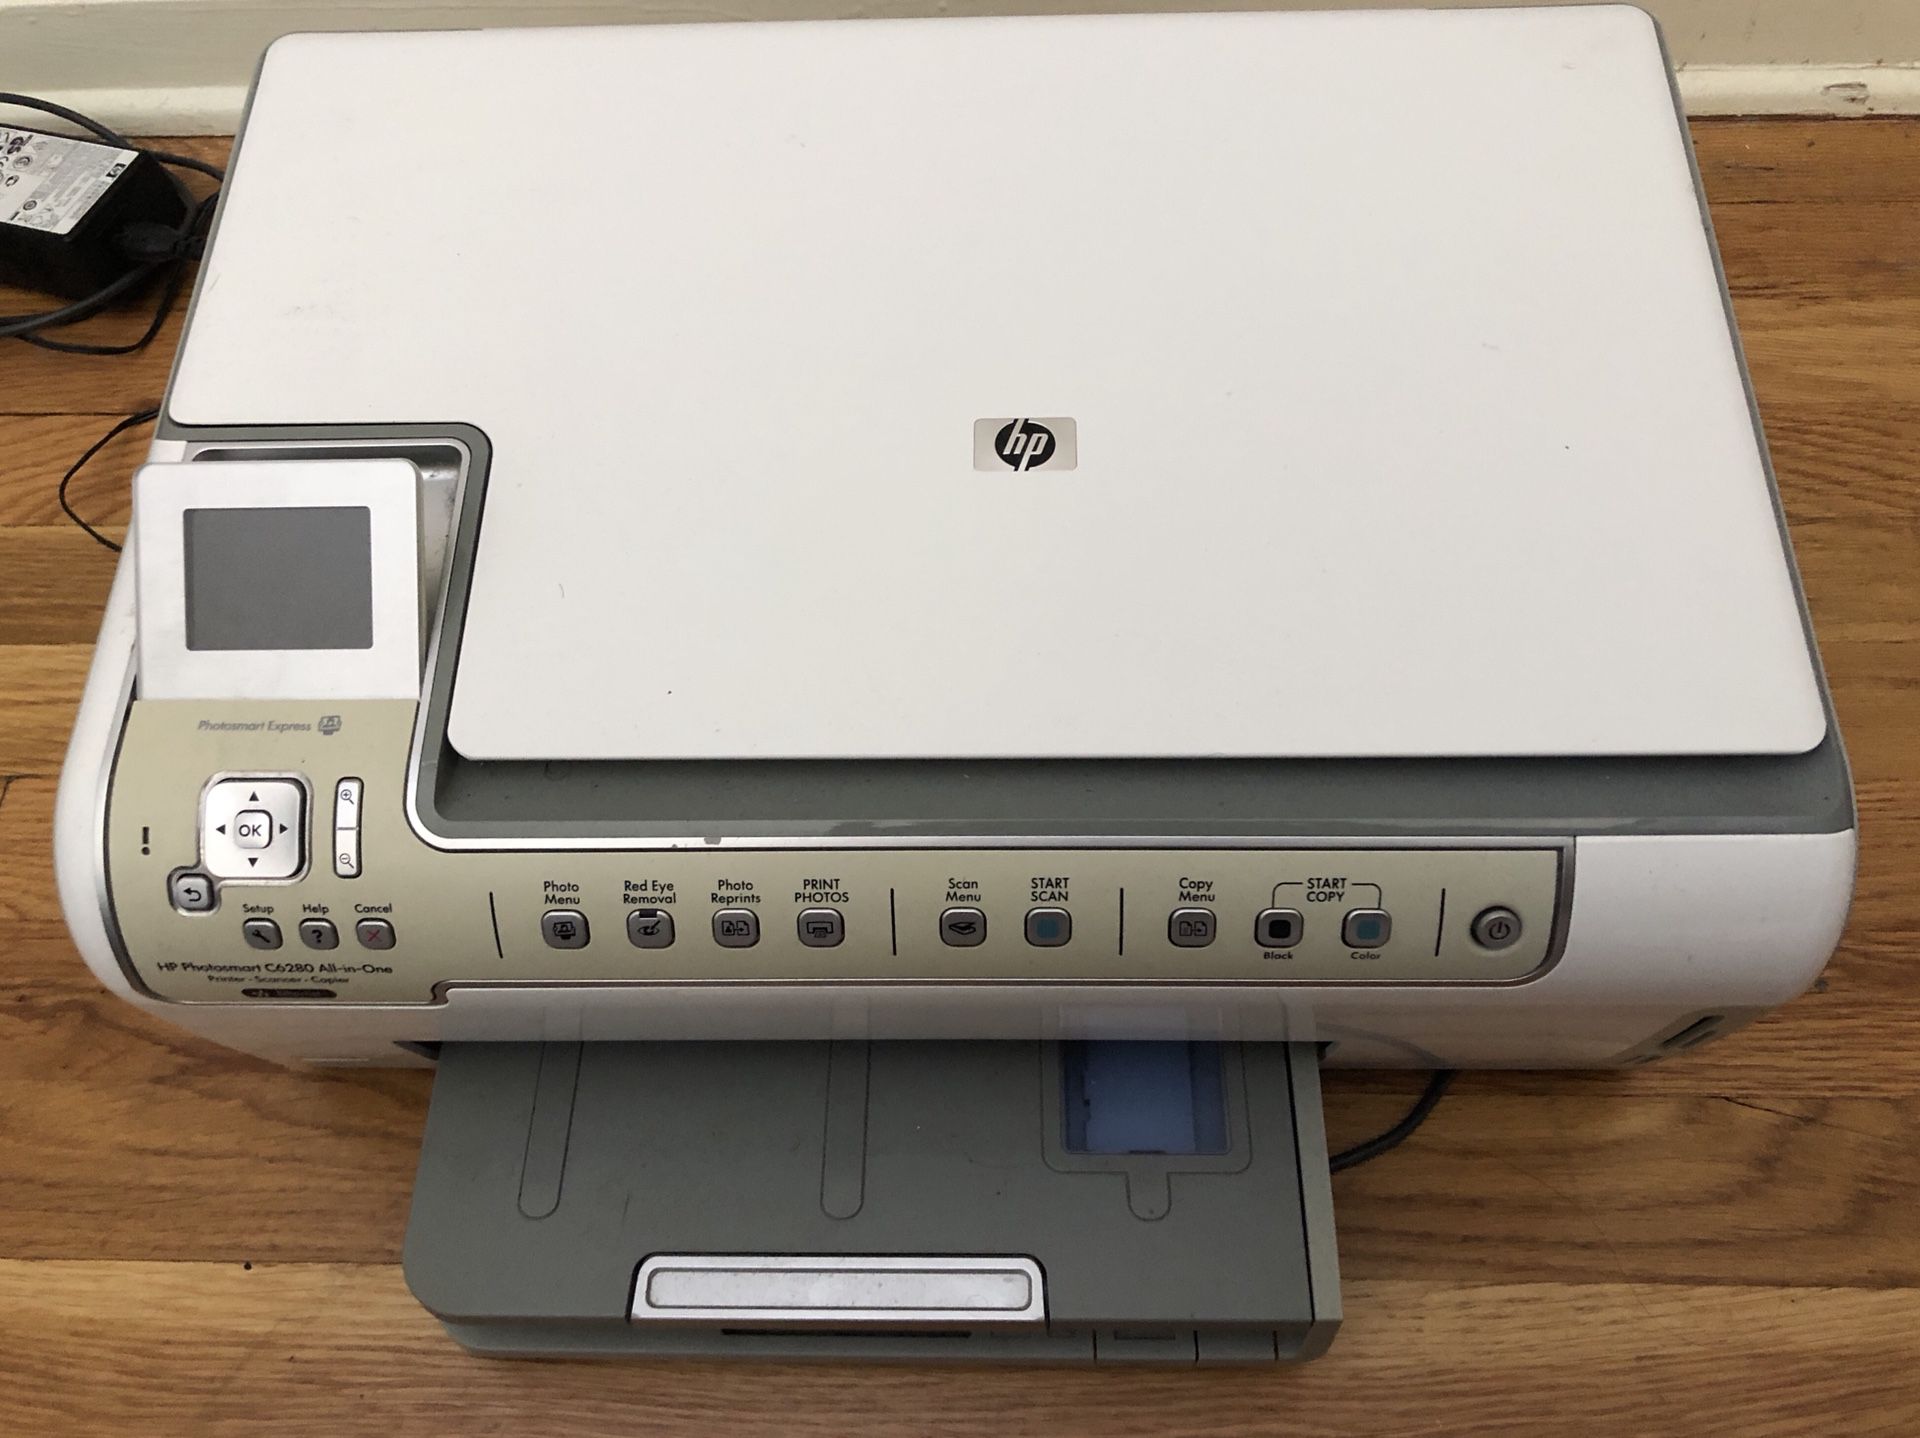 HP Photosmart C6280 printer/scanner